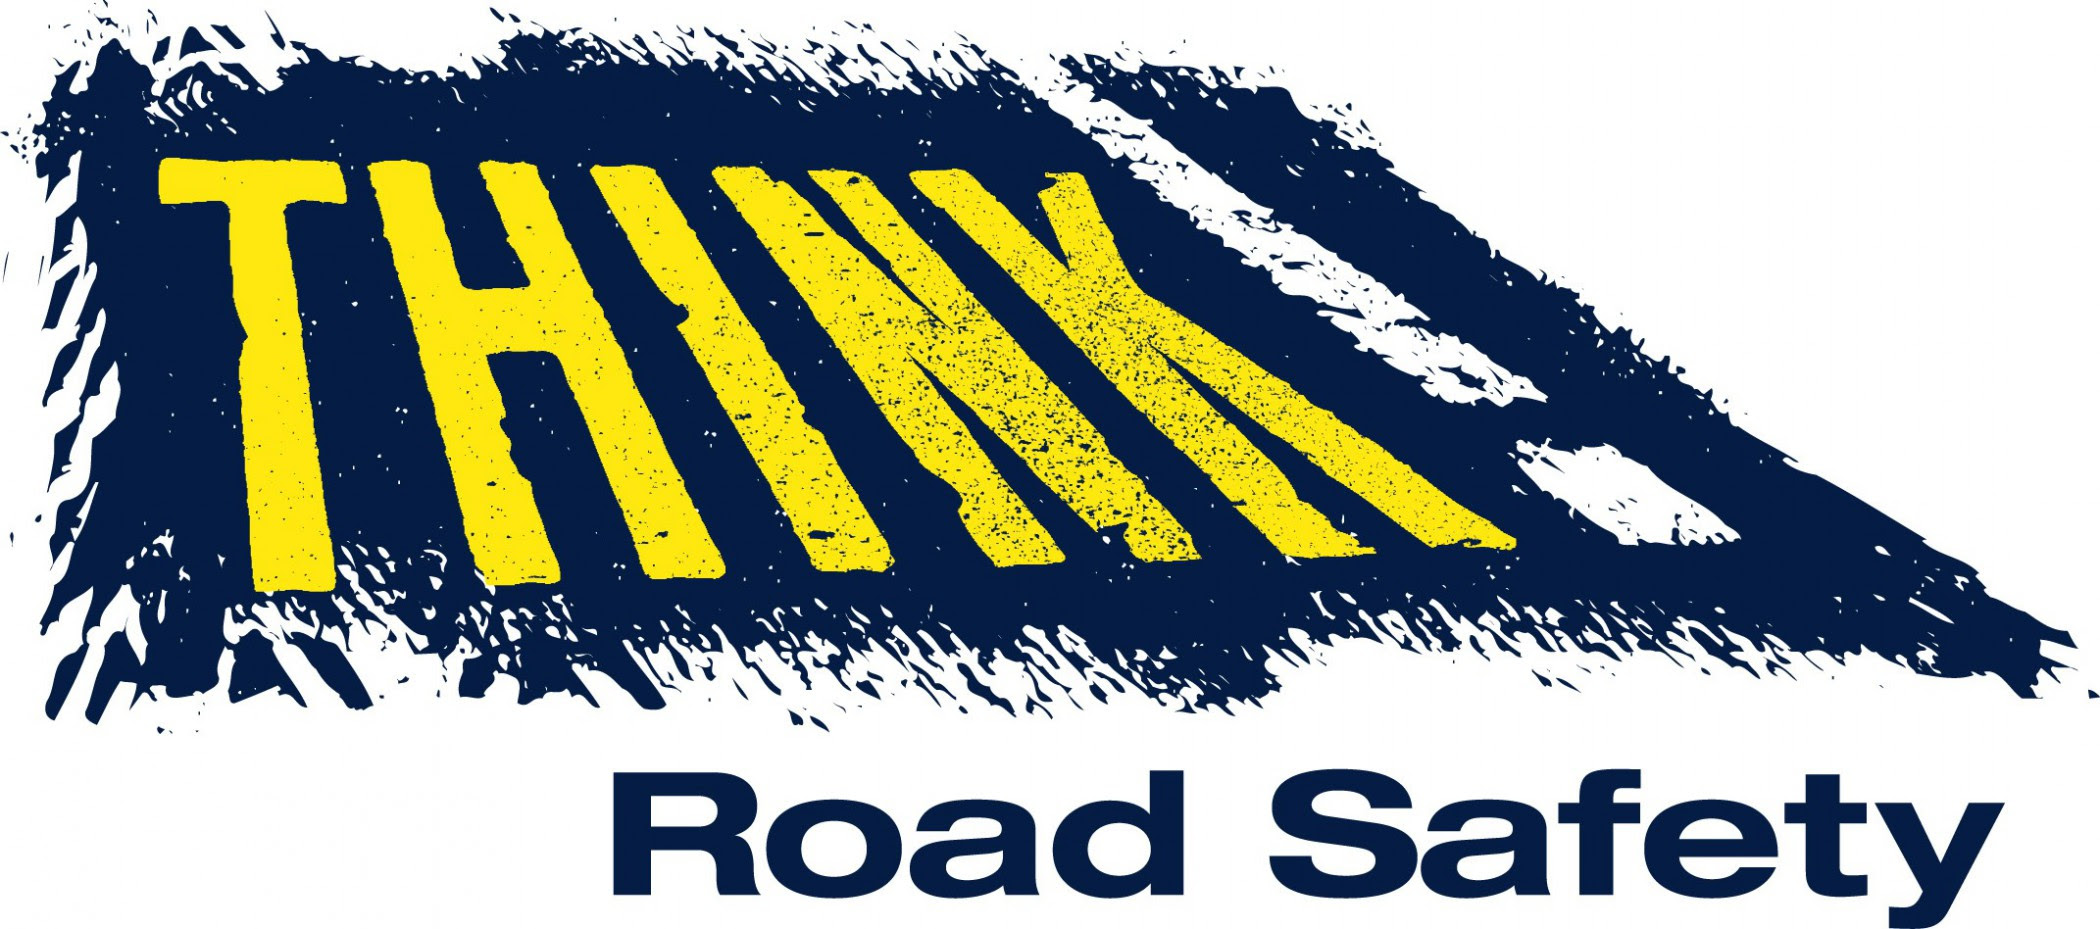 Image result for road safety